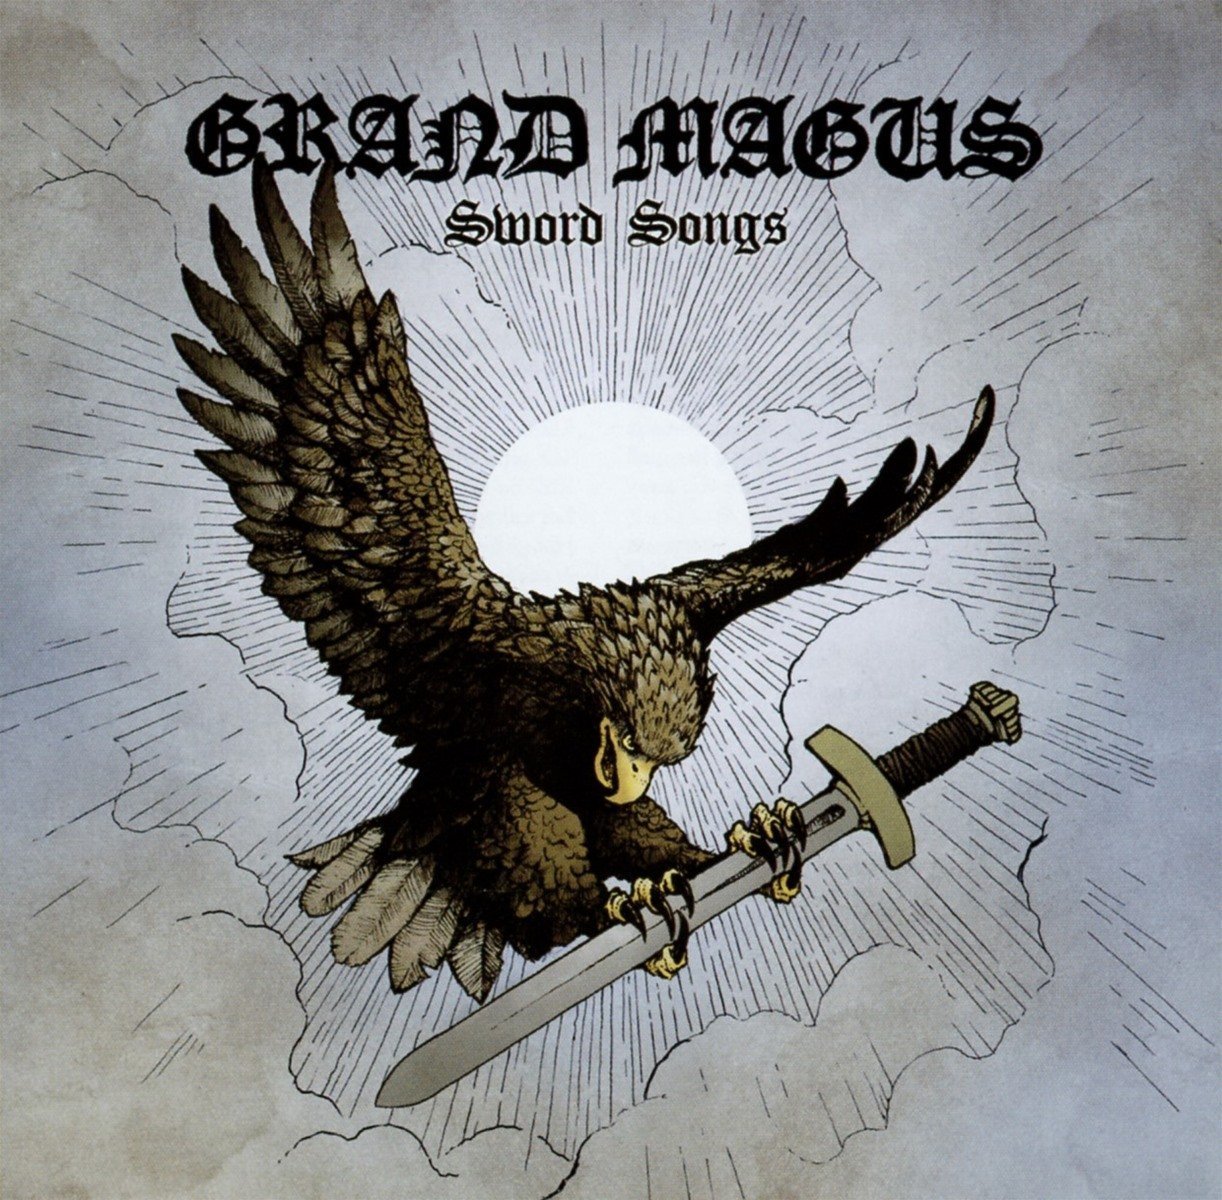 GRAND MAGUS-Sword Songs 